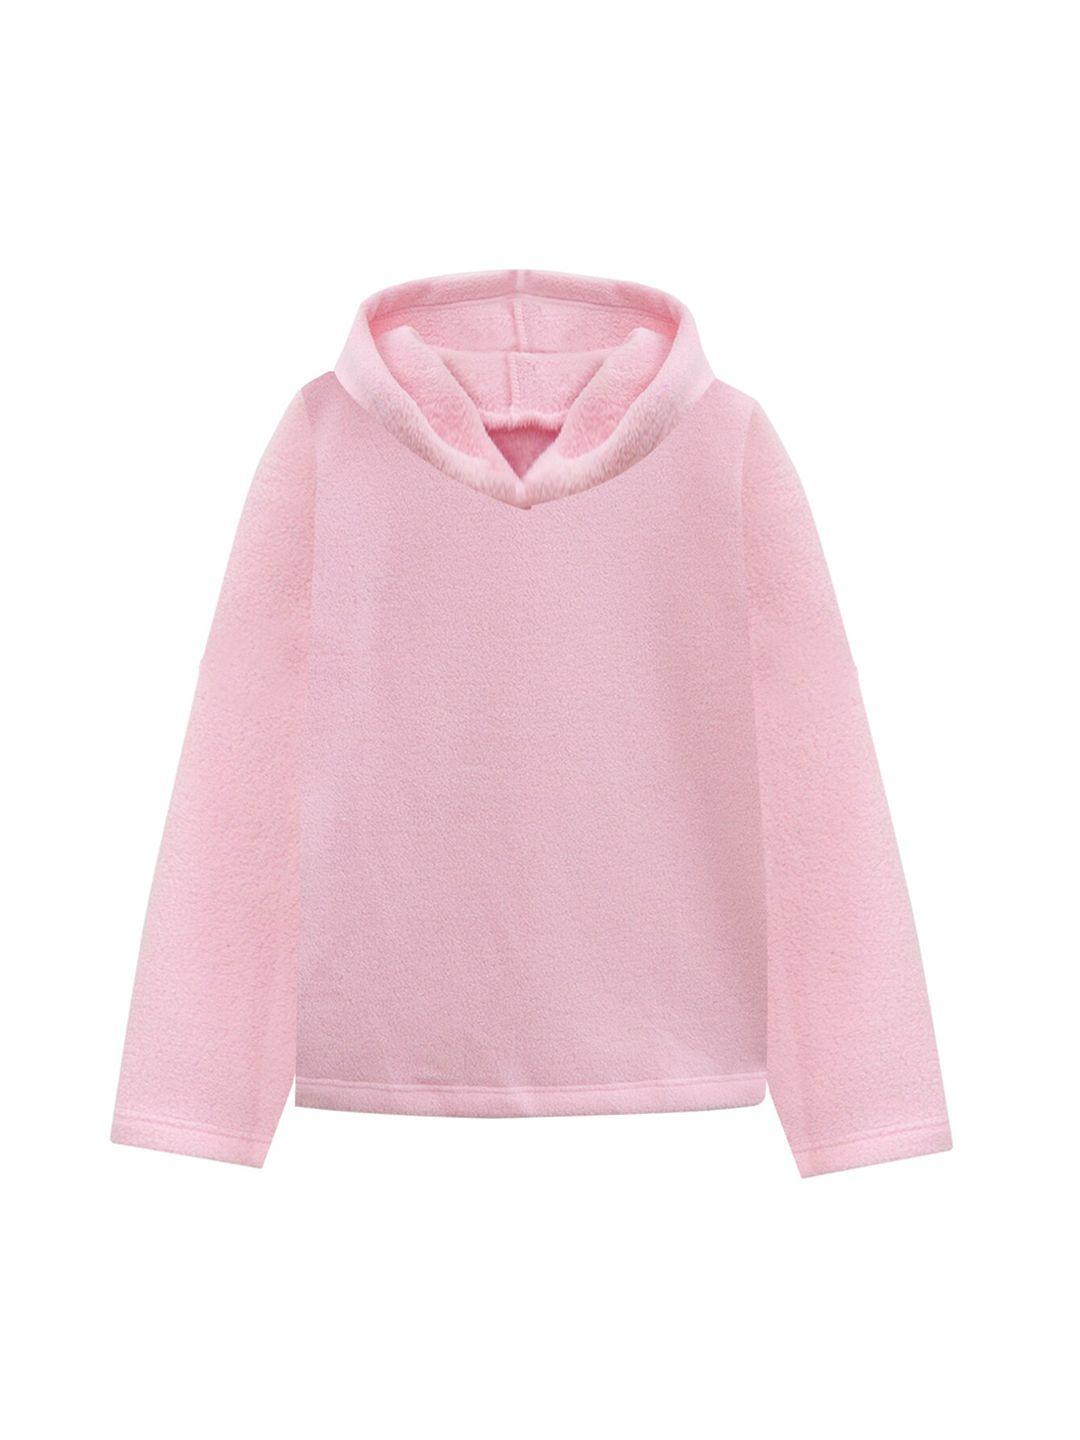 a t u n women pink hooded sweatshirt